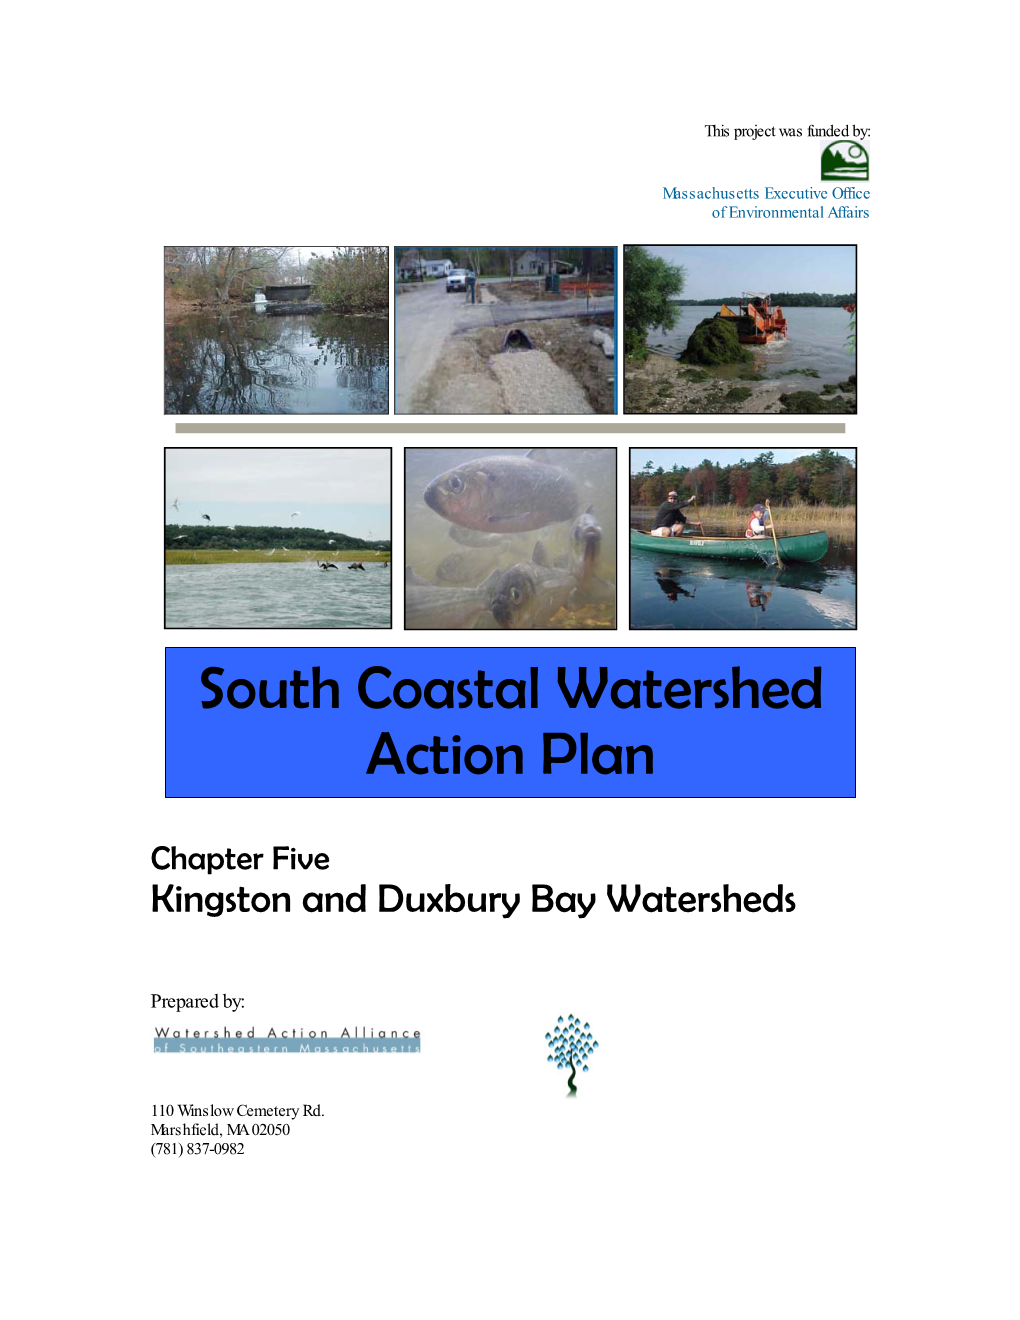 South Coastal Watershed Action Plan